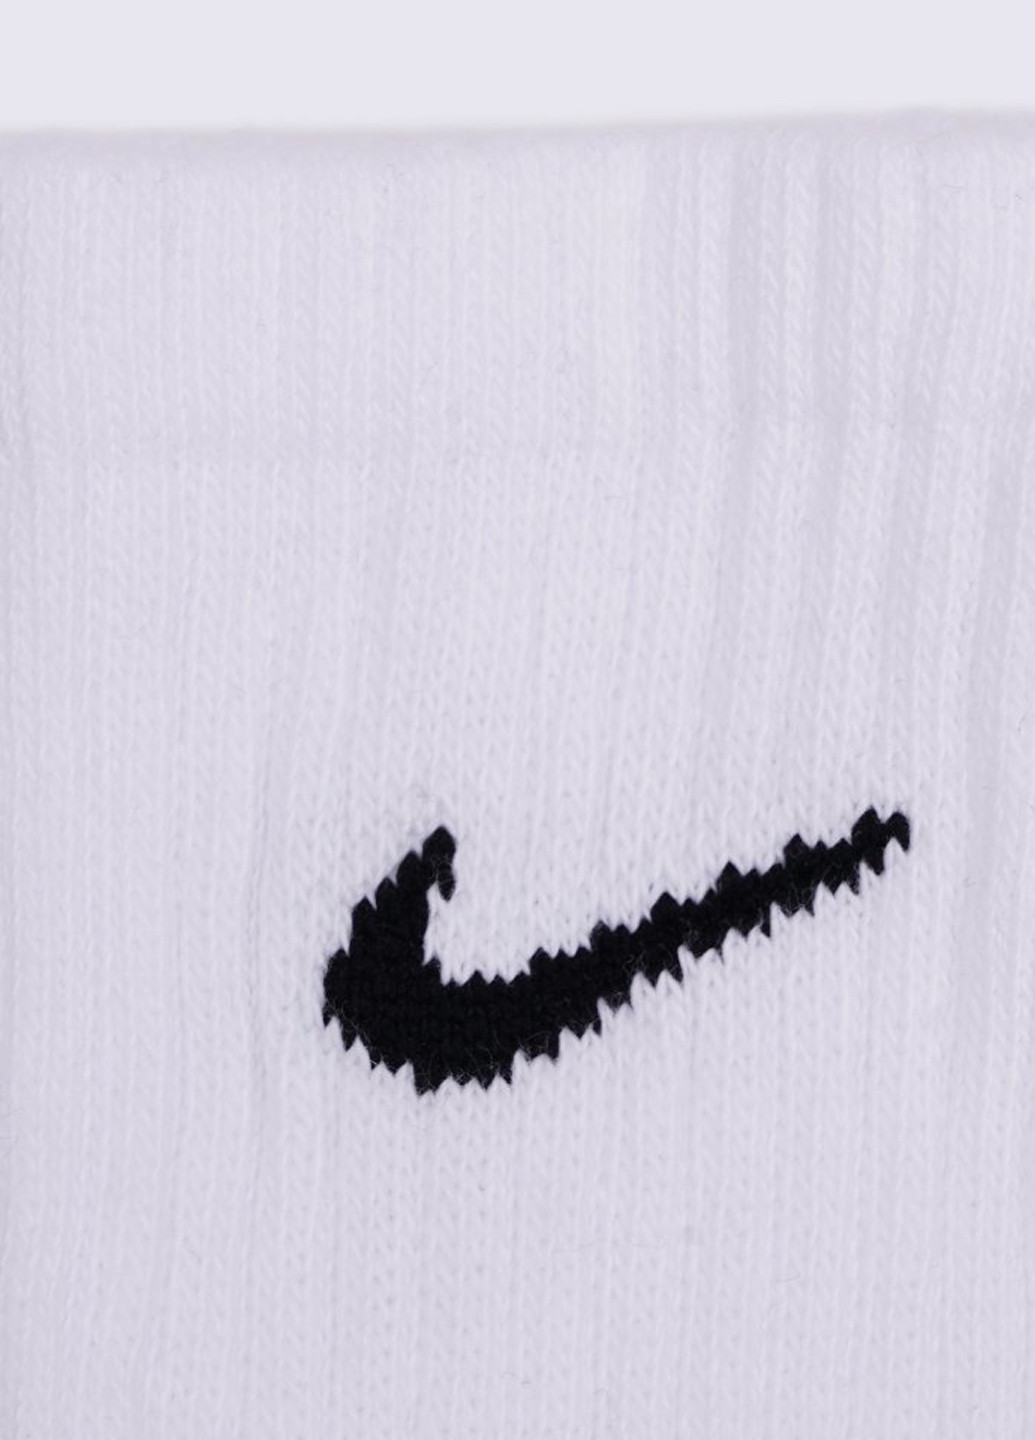 Гольфи (3 пари) Nike value cotton crew training sock (3 pair) (184153391)